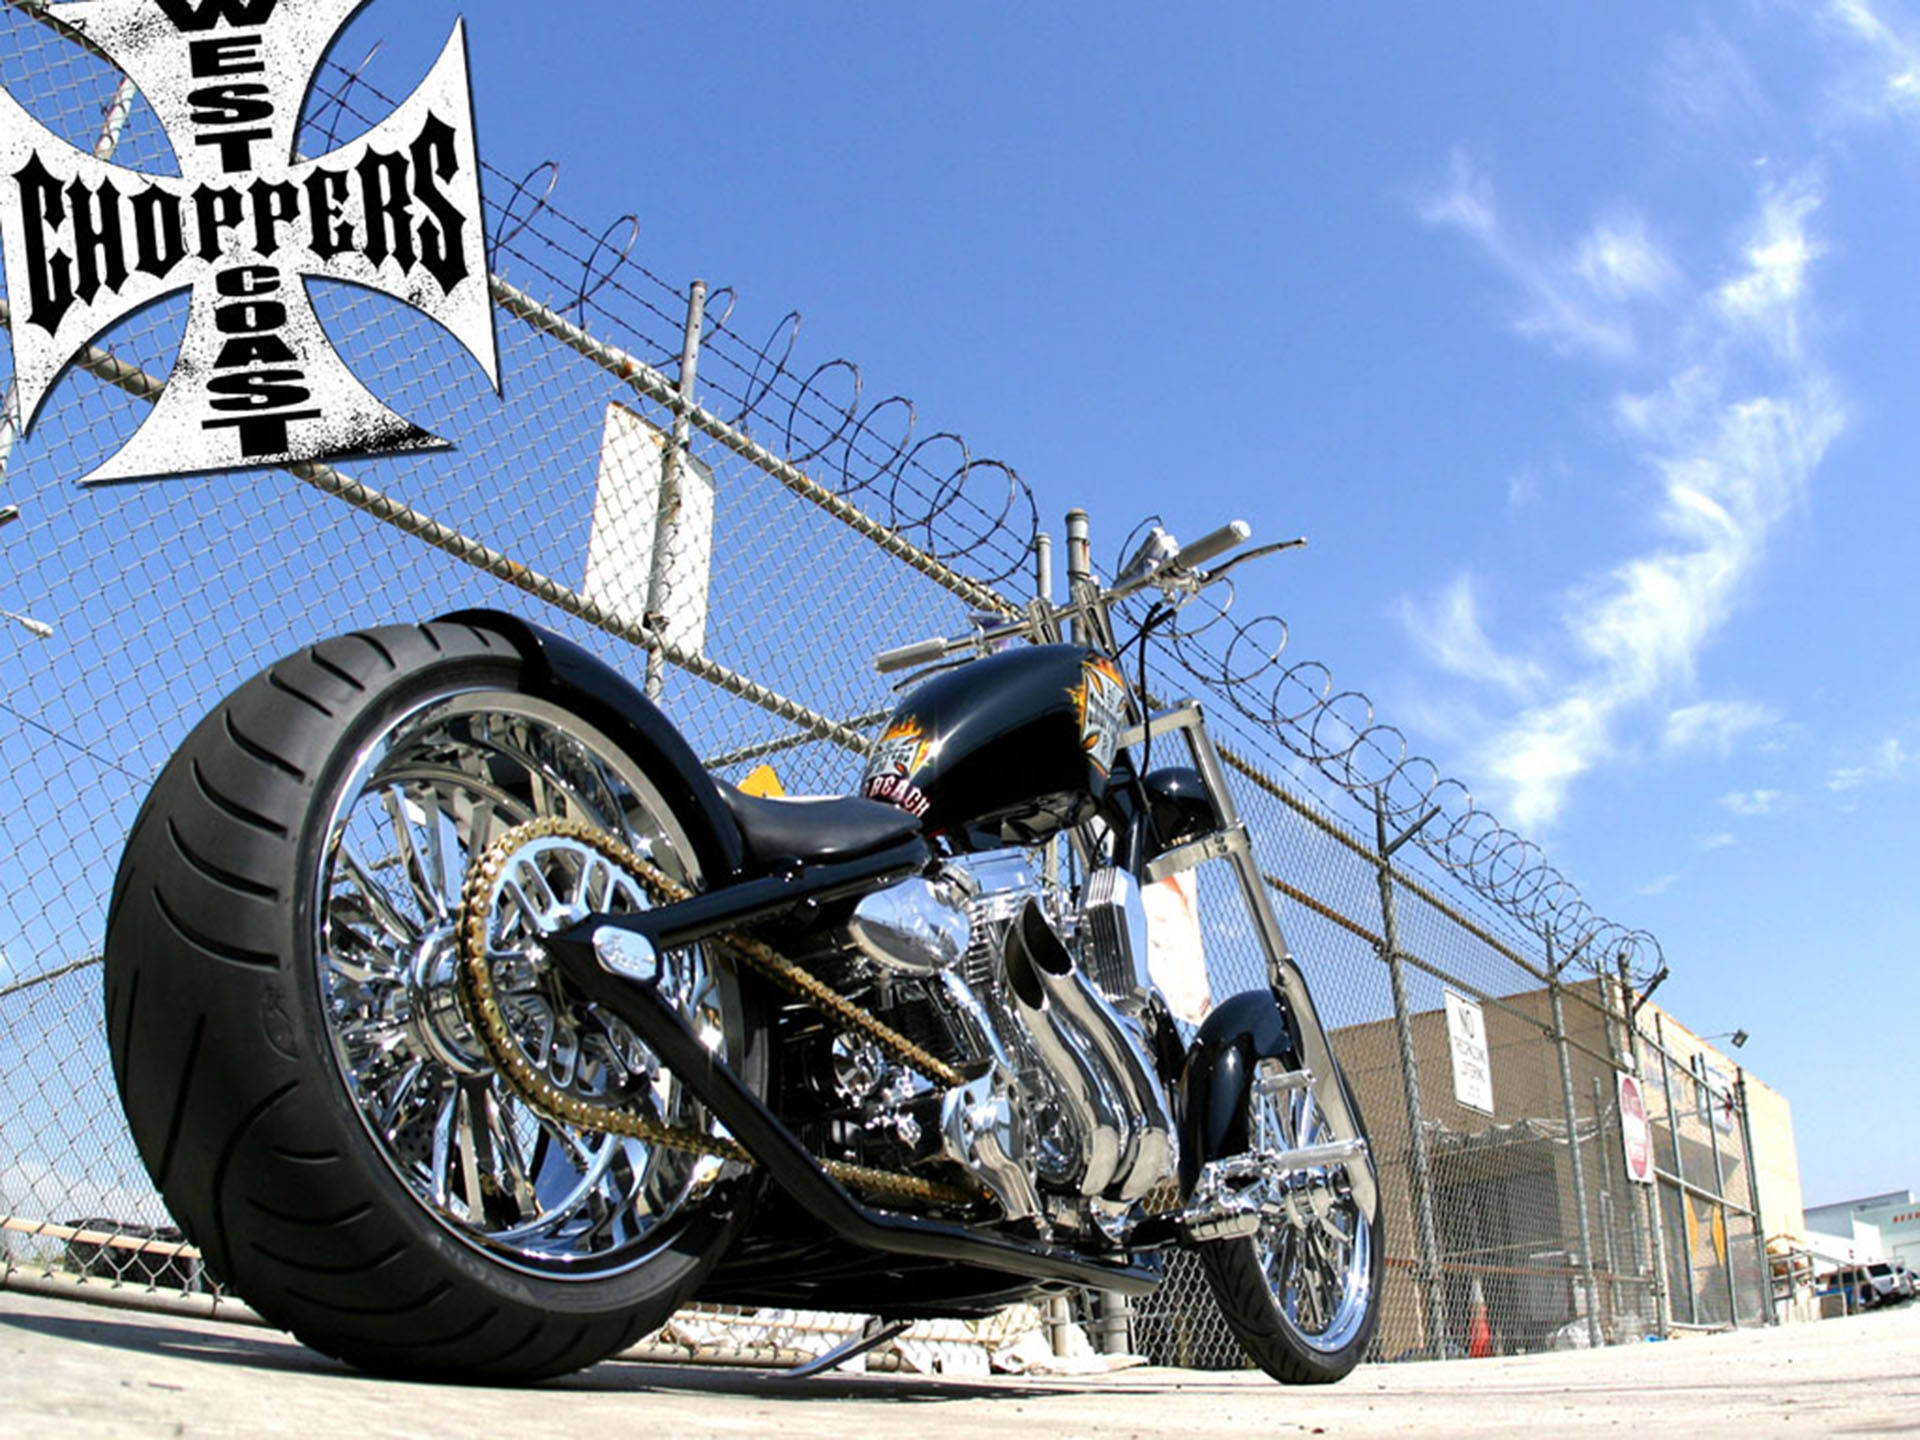 West Coast Choppers Tilpasset Motorcykel Wallpaper